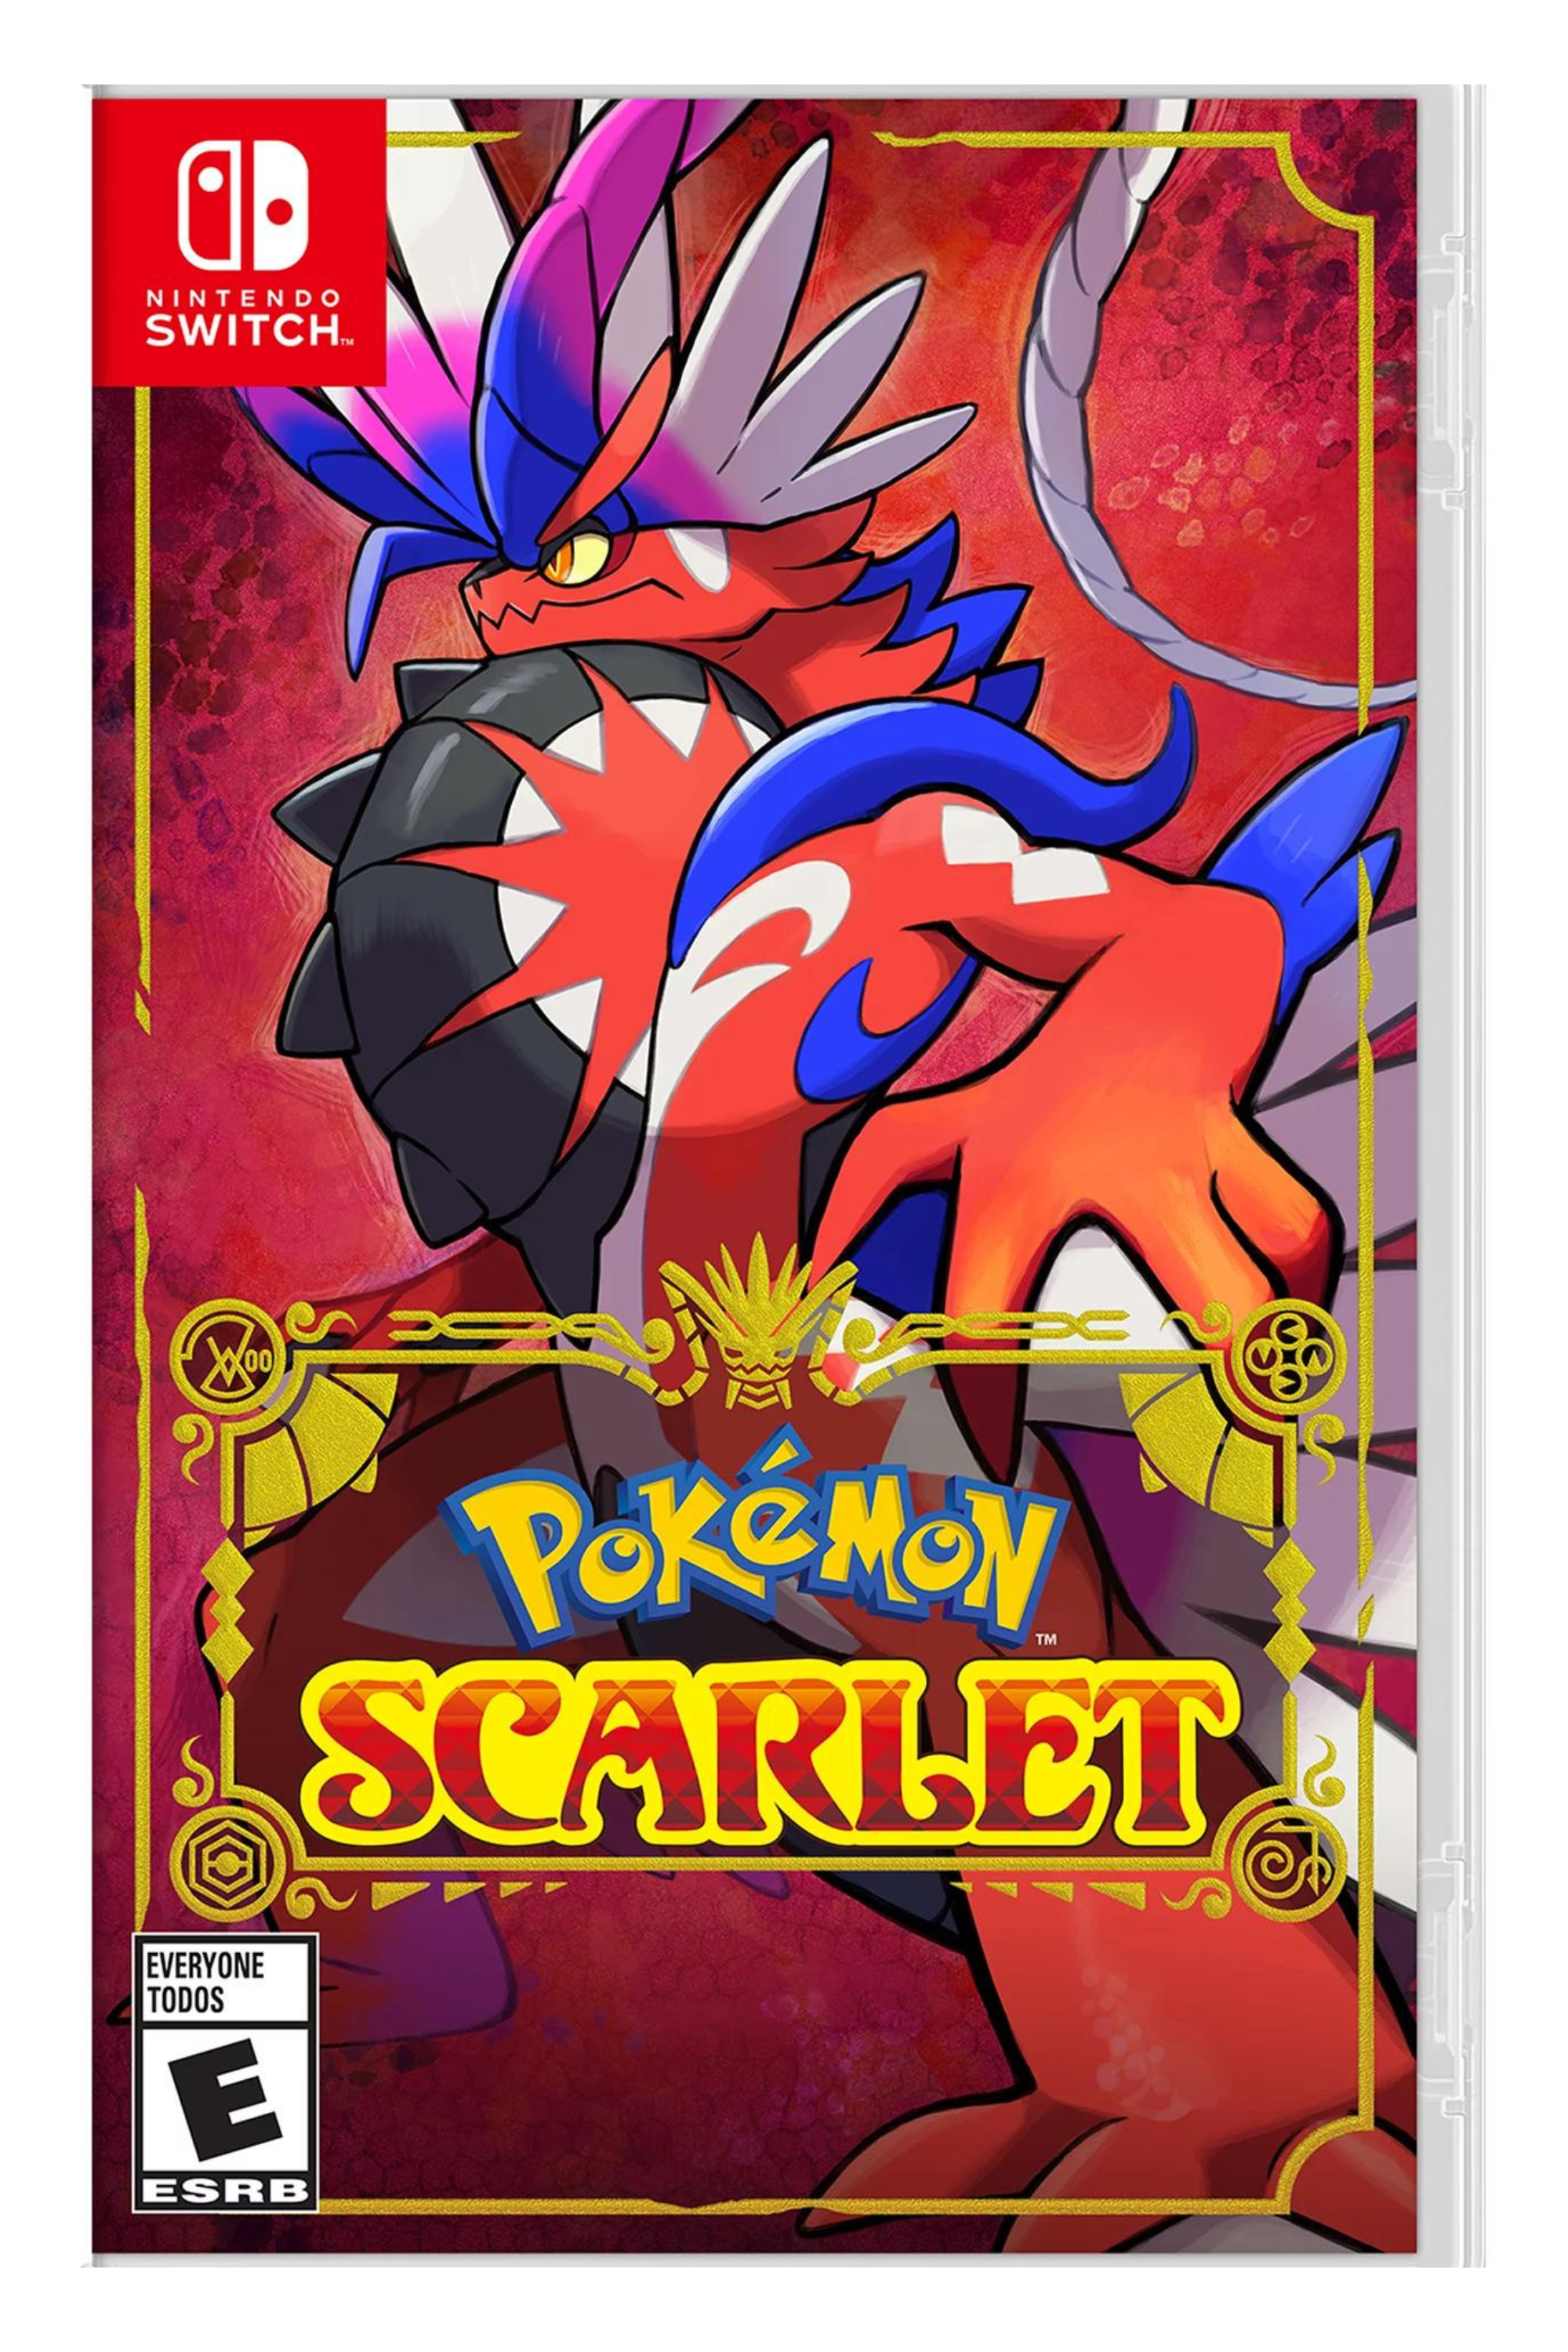 Hình ảnh bìa game Pokemon Scarlet cho Nintendo Switch